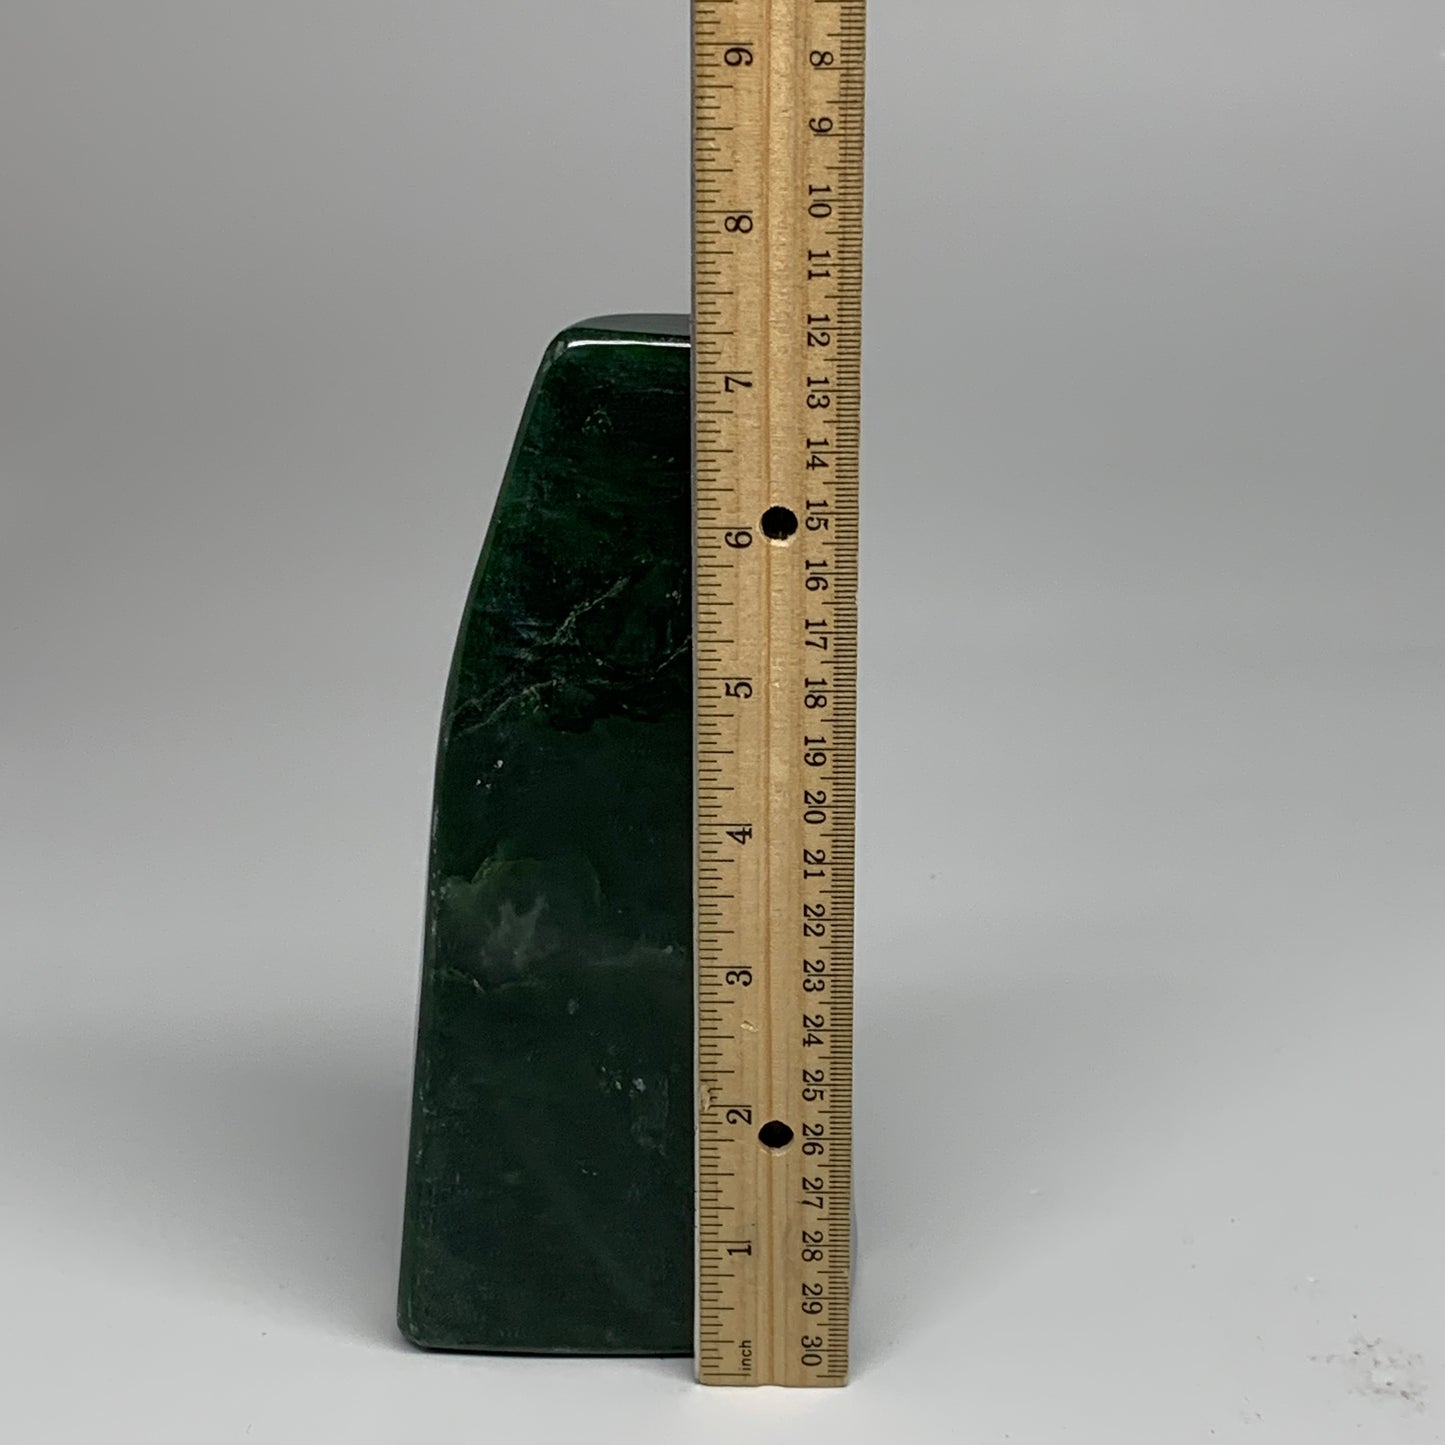 3.49 lbs, 7.3"x3.2"x2.4", Nephrite Jade Freeform Polished @Afghanistan, B30226